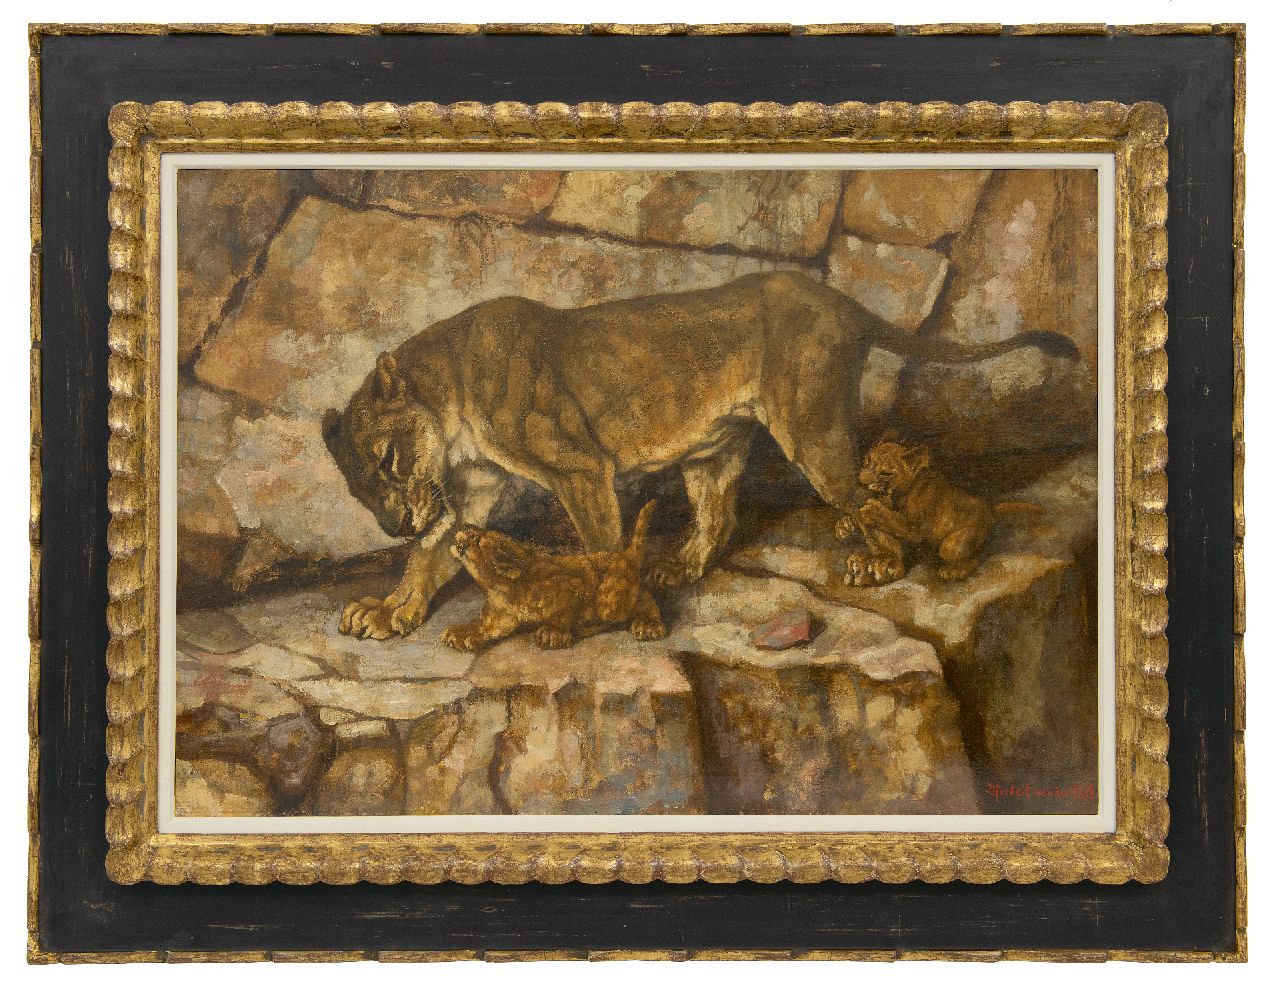 Poll D.H. van der | Daniël Herbert van der Poll | Paintings offered for sale | Lioness with her cubs, oil on canvas 49.5 x 69.8 cm, signed l.r.